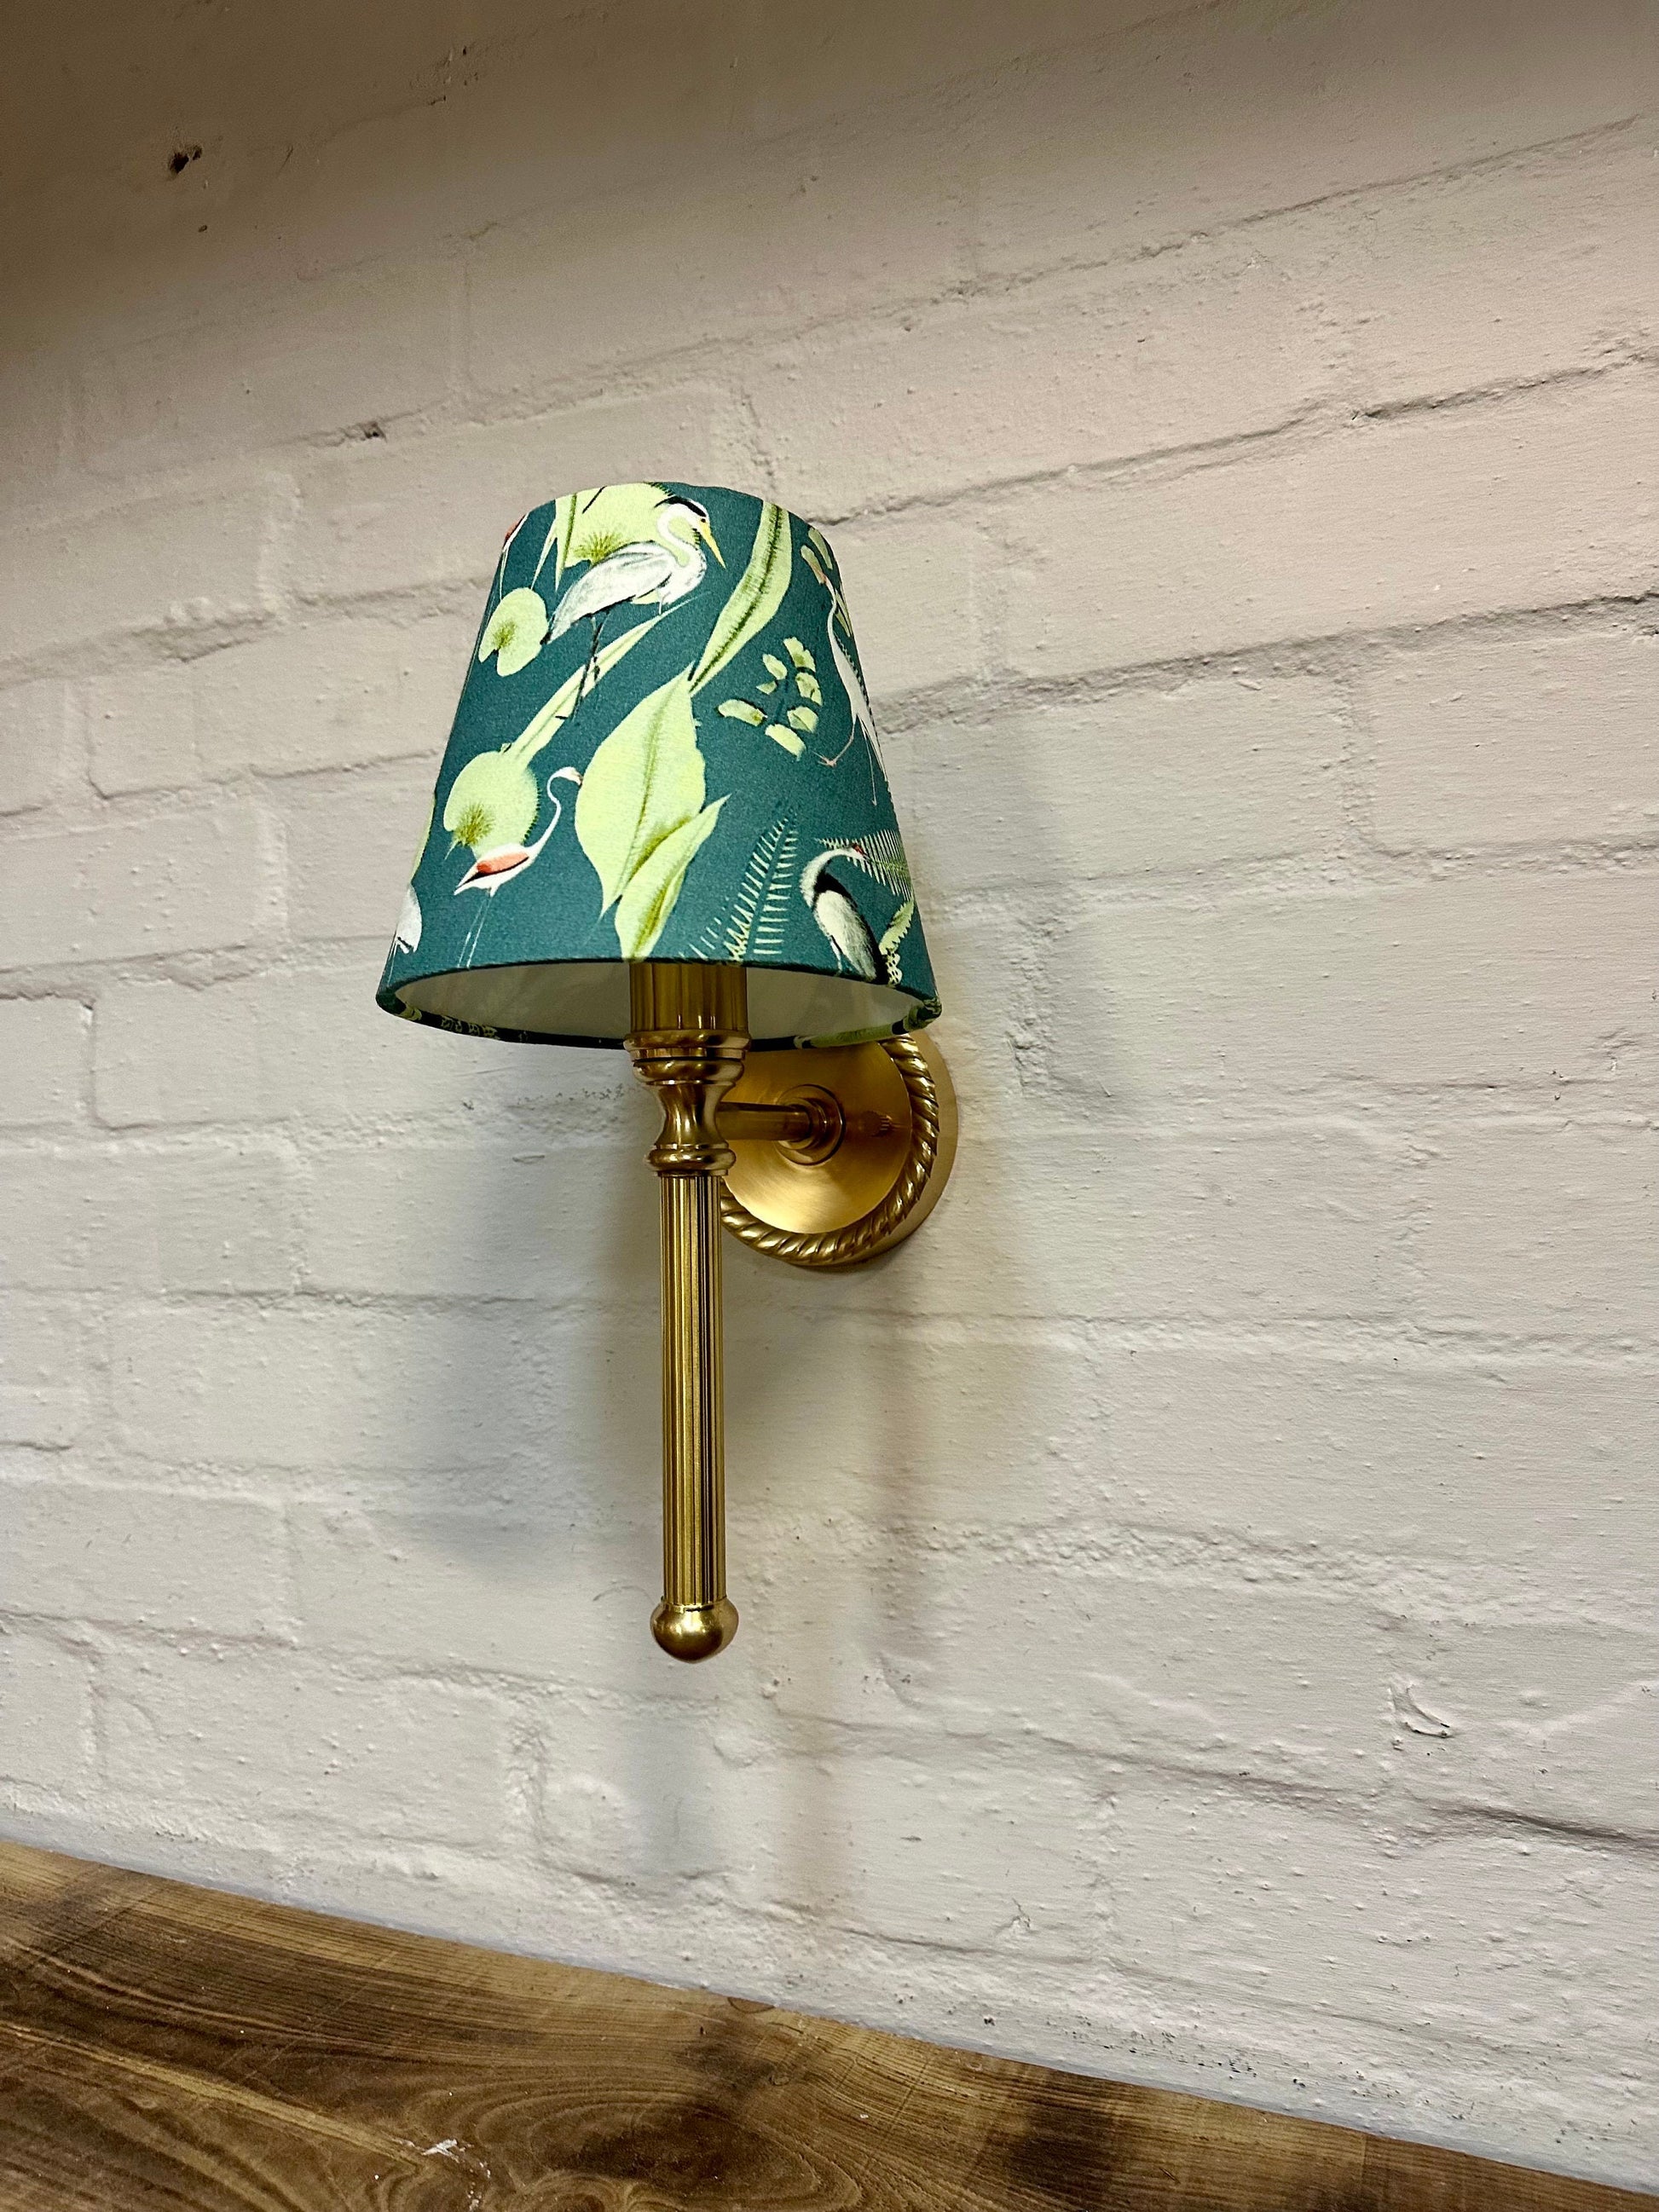 Felbrigg ~ Antique Brass Wall Sconce Industrial Vintage Light | Dining Room | Kitchen Table